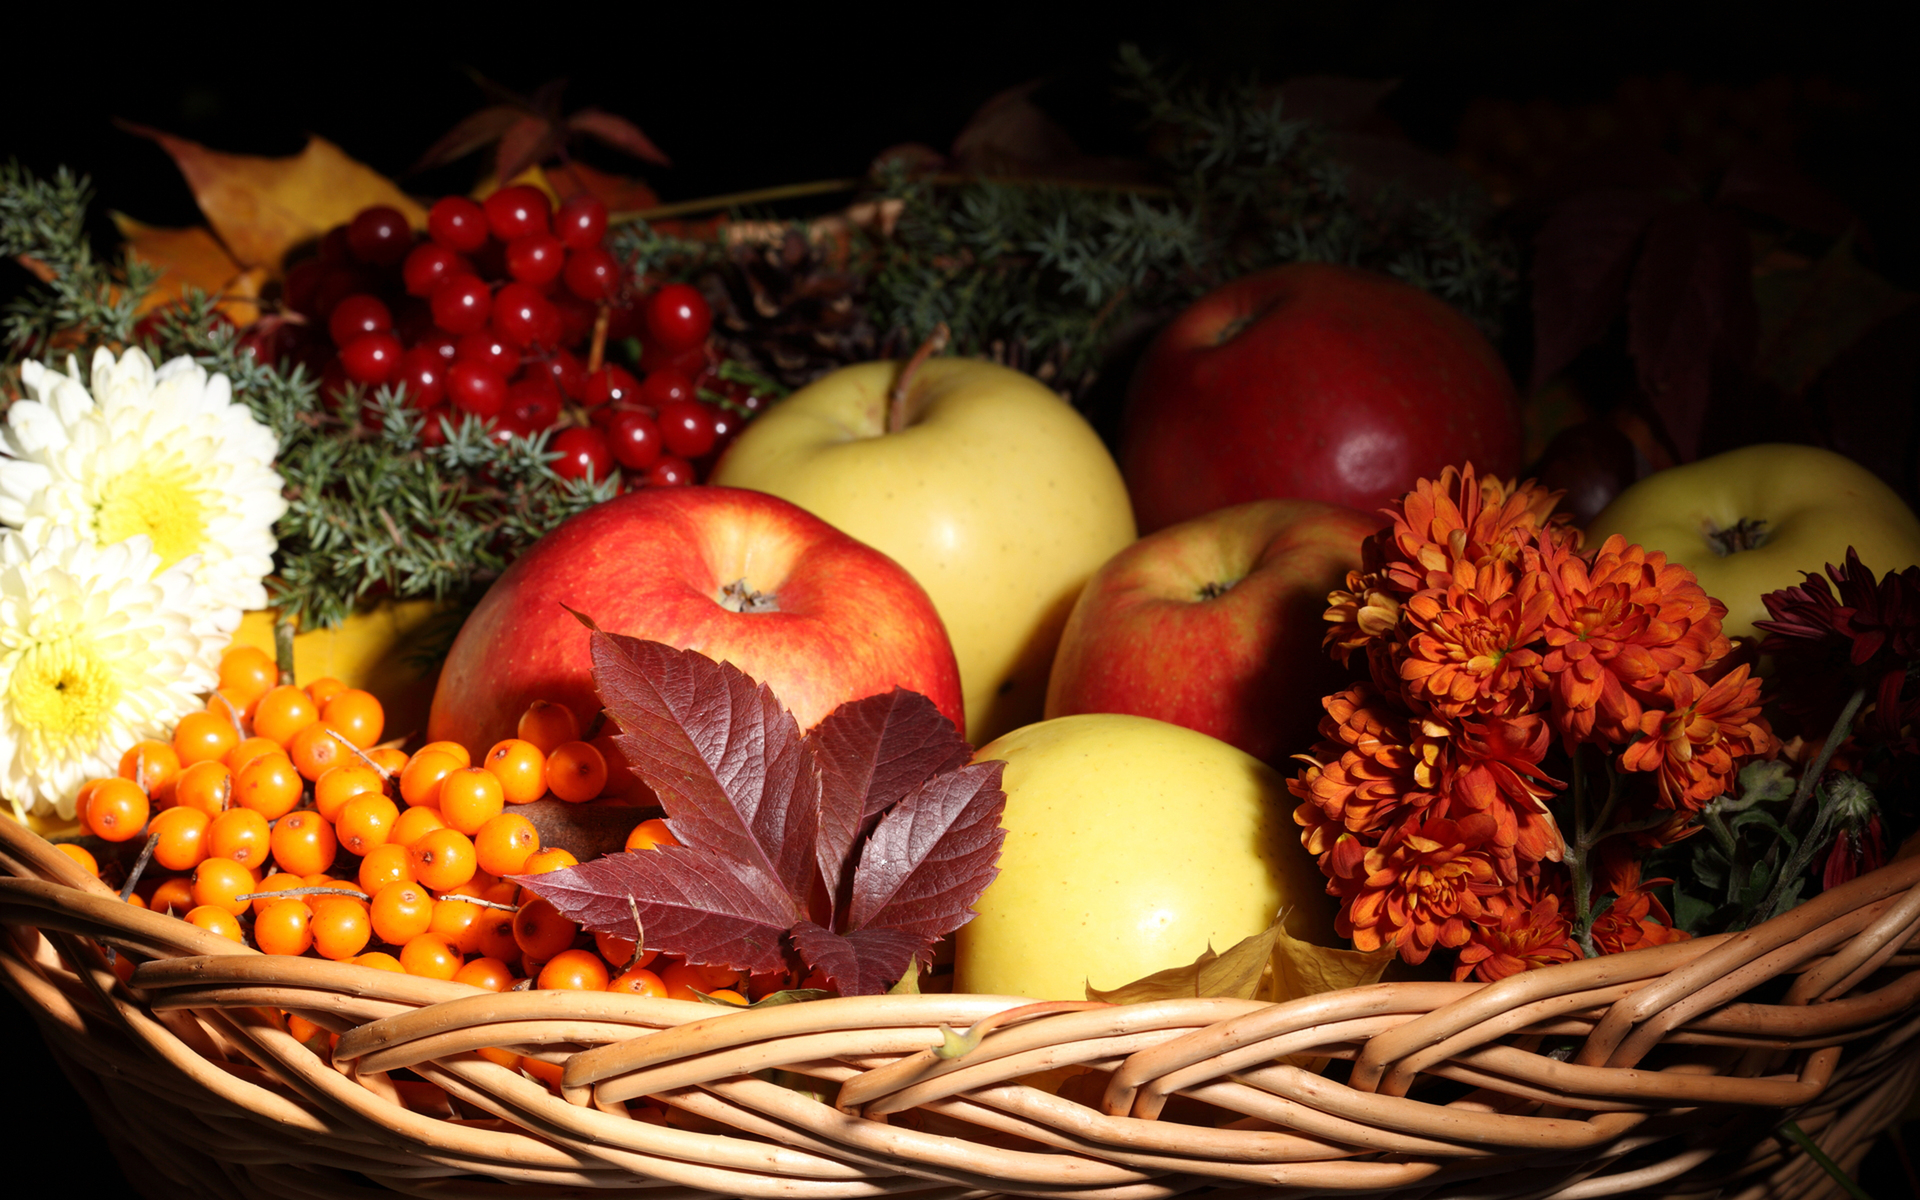 551525 descargar imagen alimento, bodegón, manzana, cesta, otoño, fruta, día de acción de gracias: fondos de pantalla y protectores de pantalla gratis